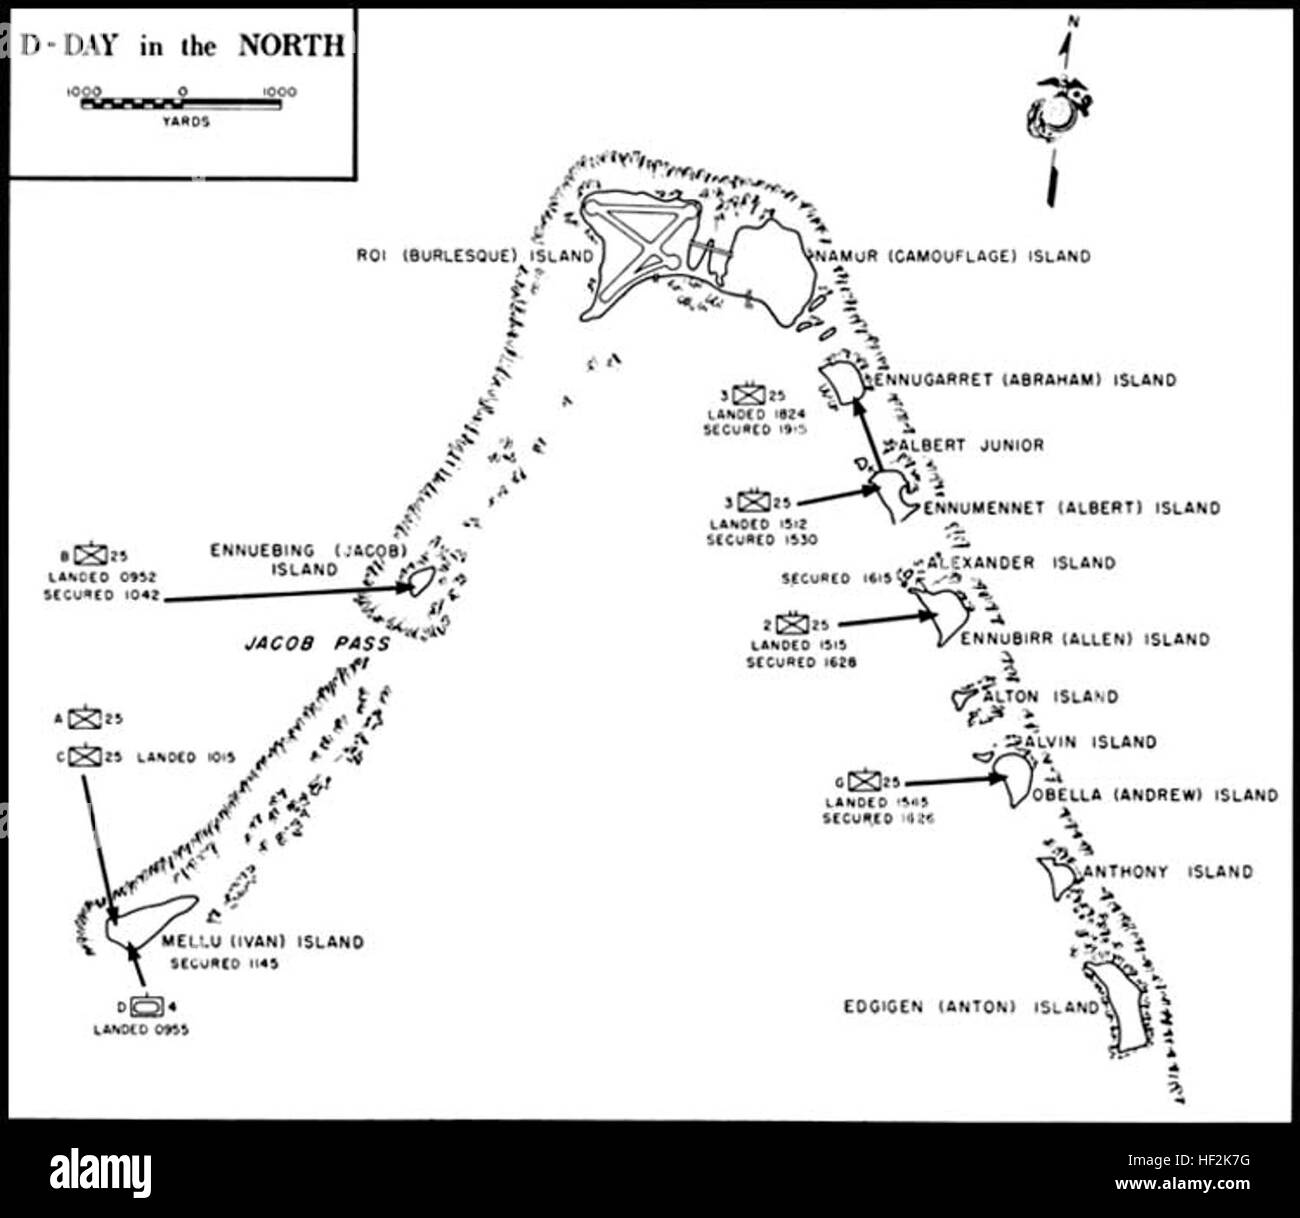 Battle of Kwajalein map - Northern part of Kwajalein Atoll Stock Photo